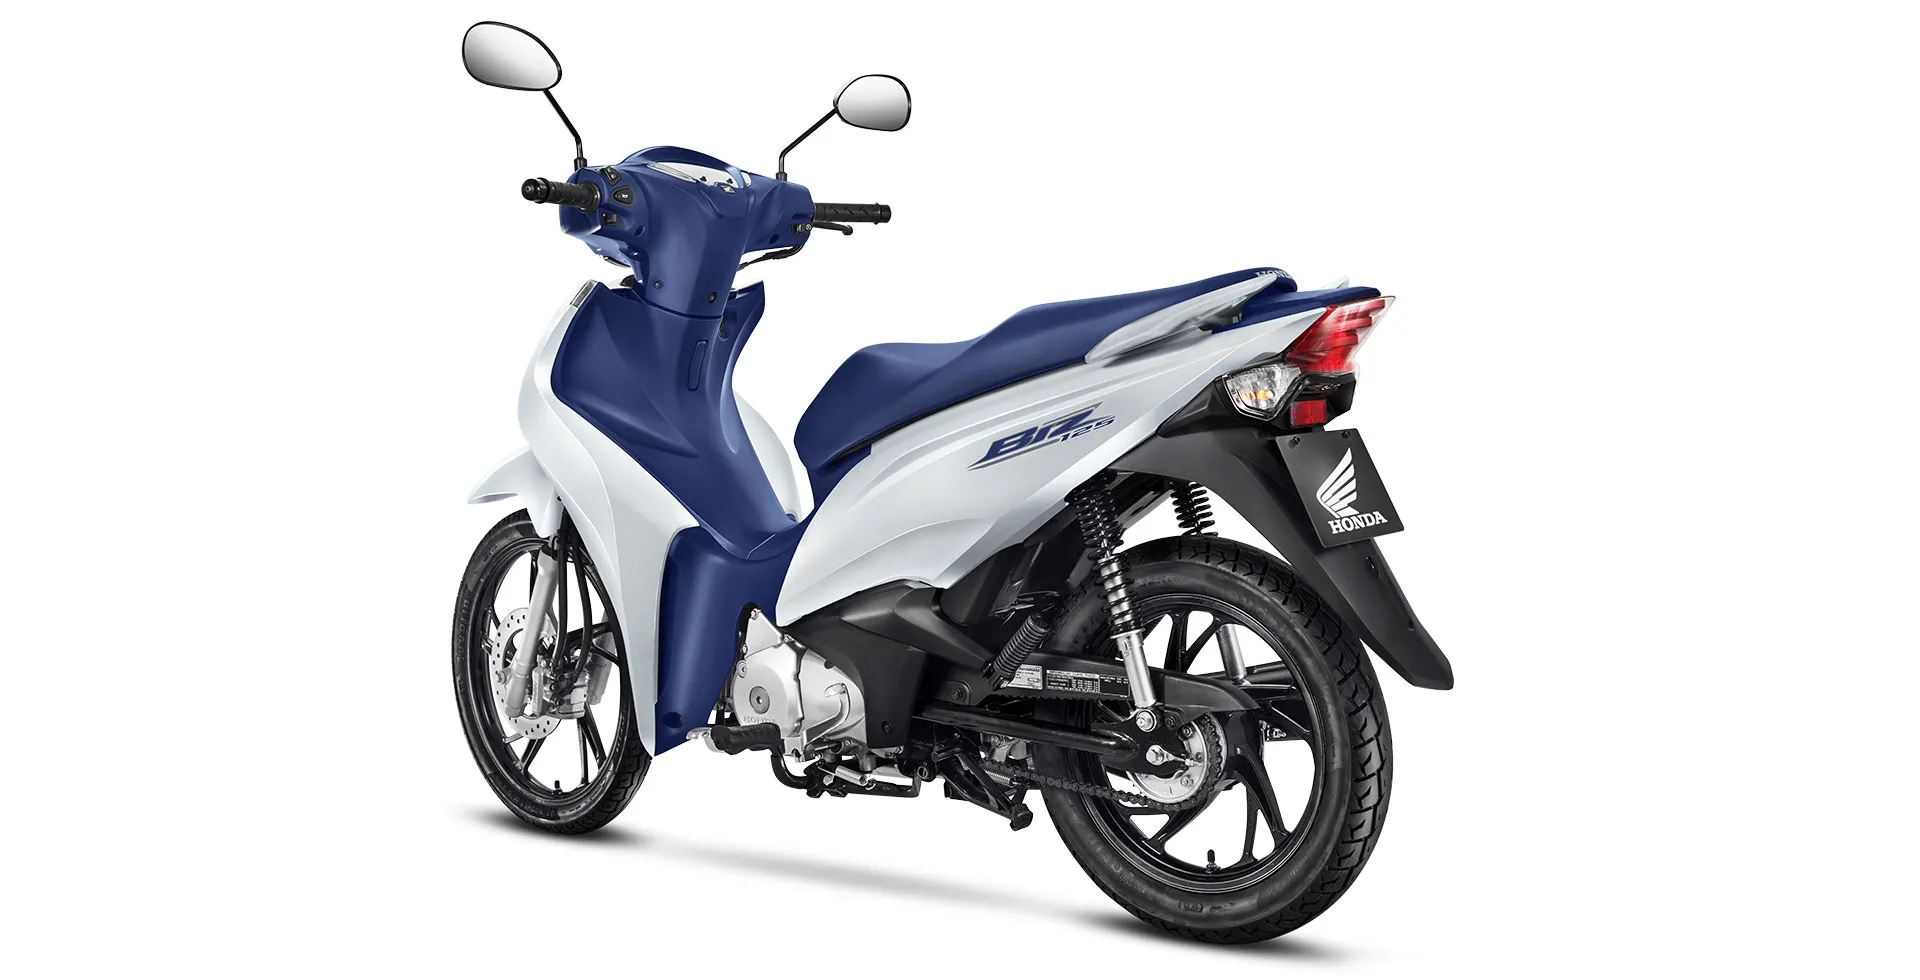 Imagem representativa da moto Honda Biz 125 azul. 